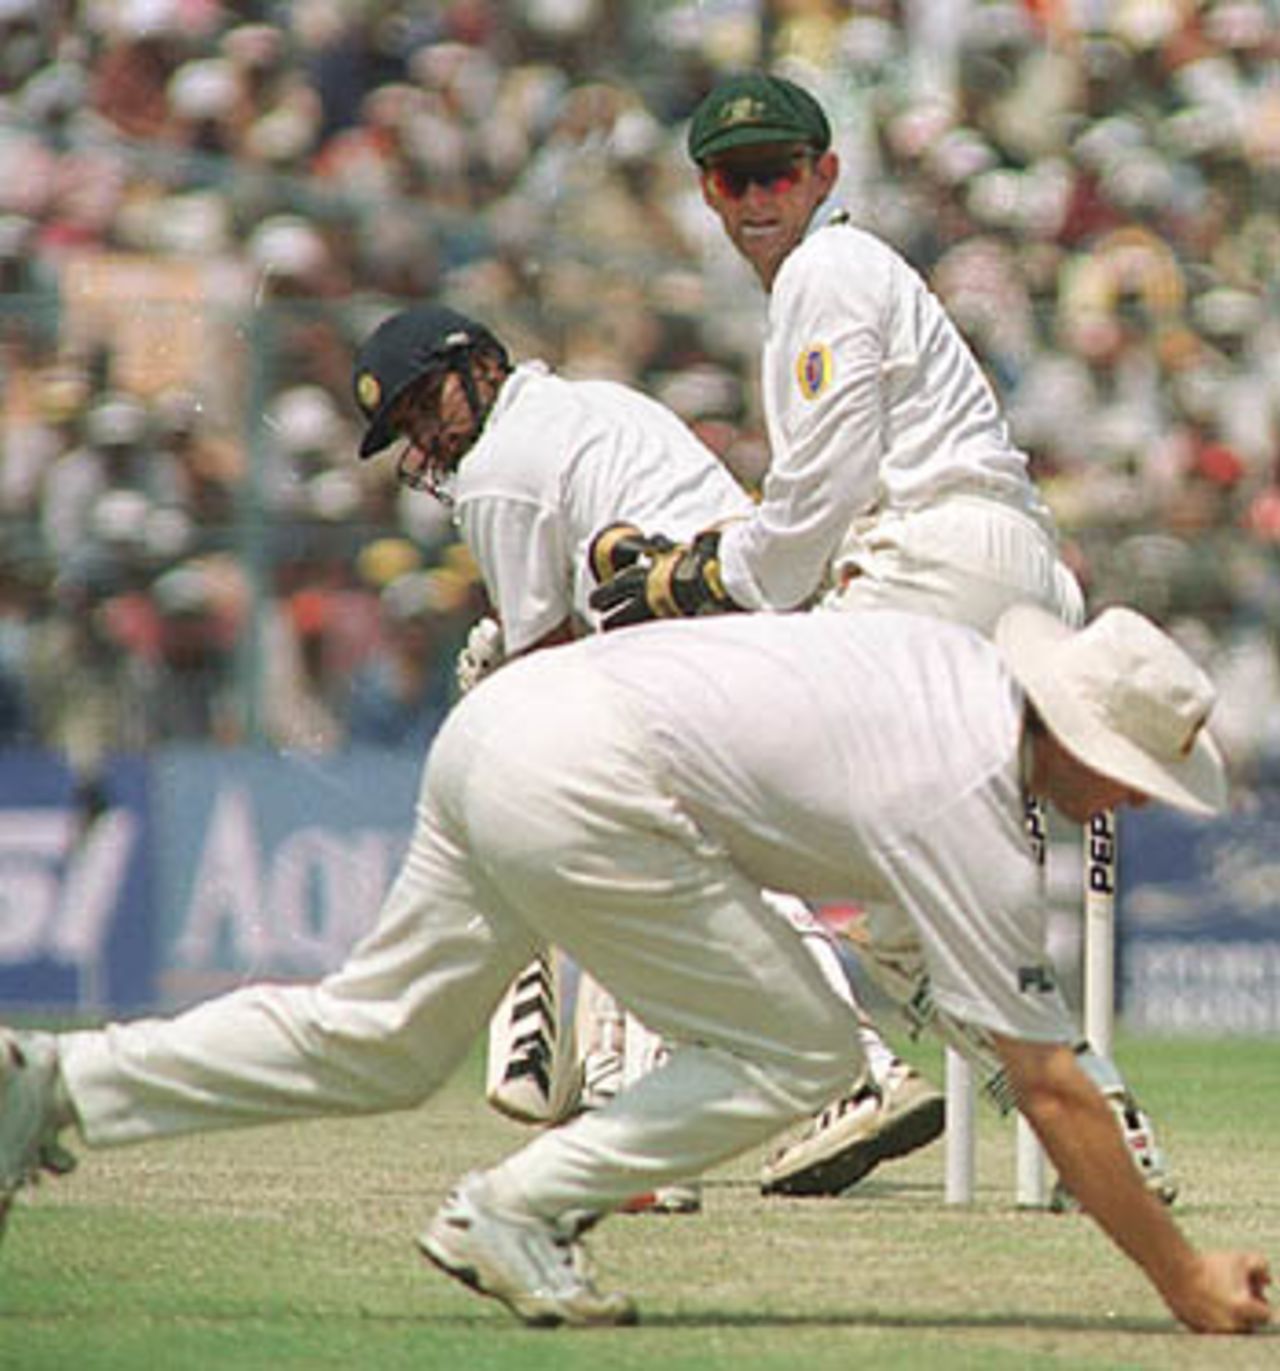 13 Mar 2001: Australia in India, India v Australia 2nd Test, Eden Gardens, Calcutta 11-15 Mar 2001 (Day 3).